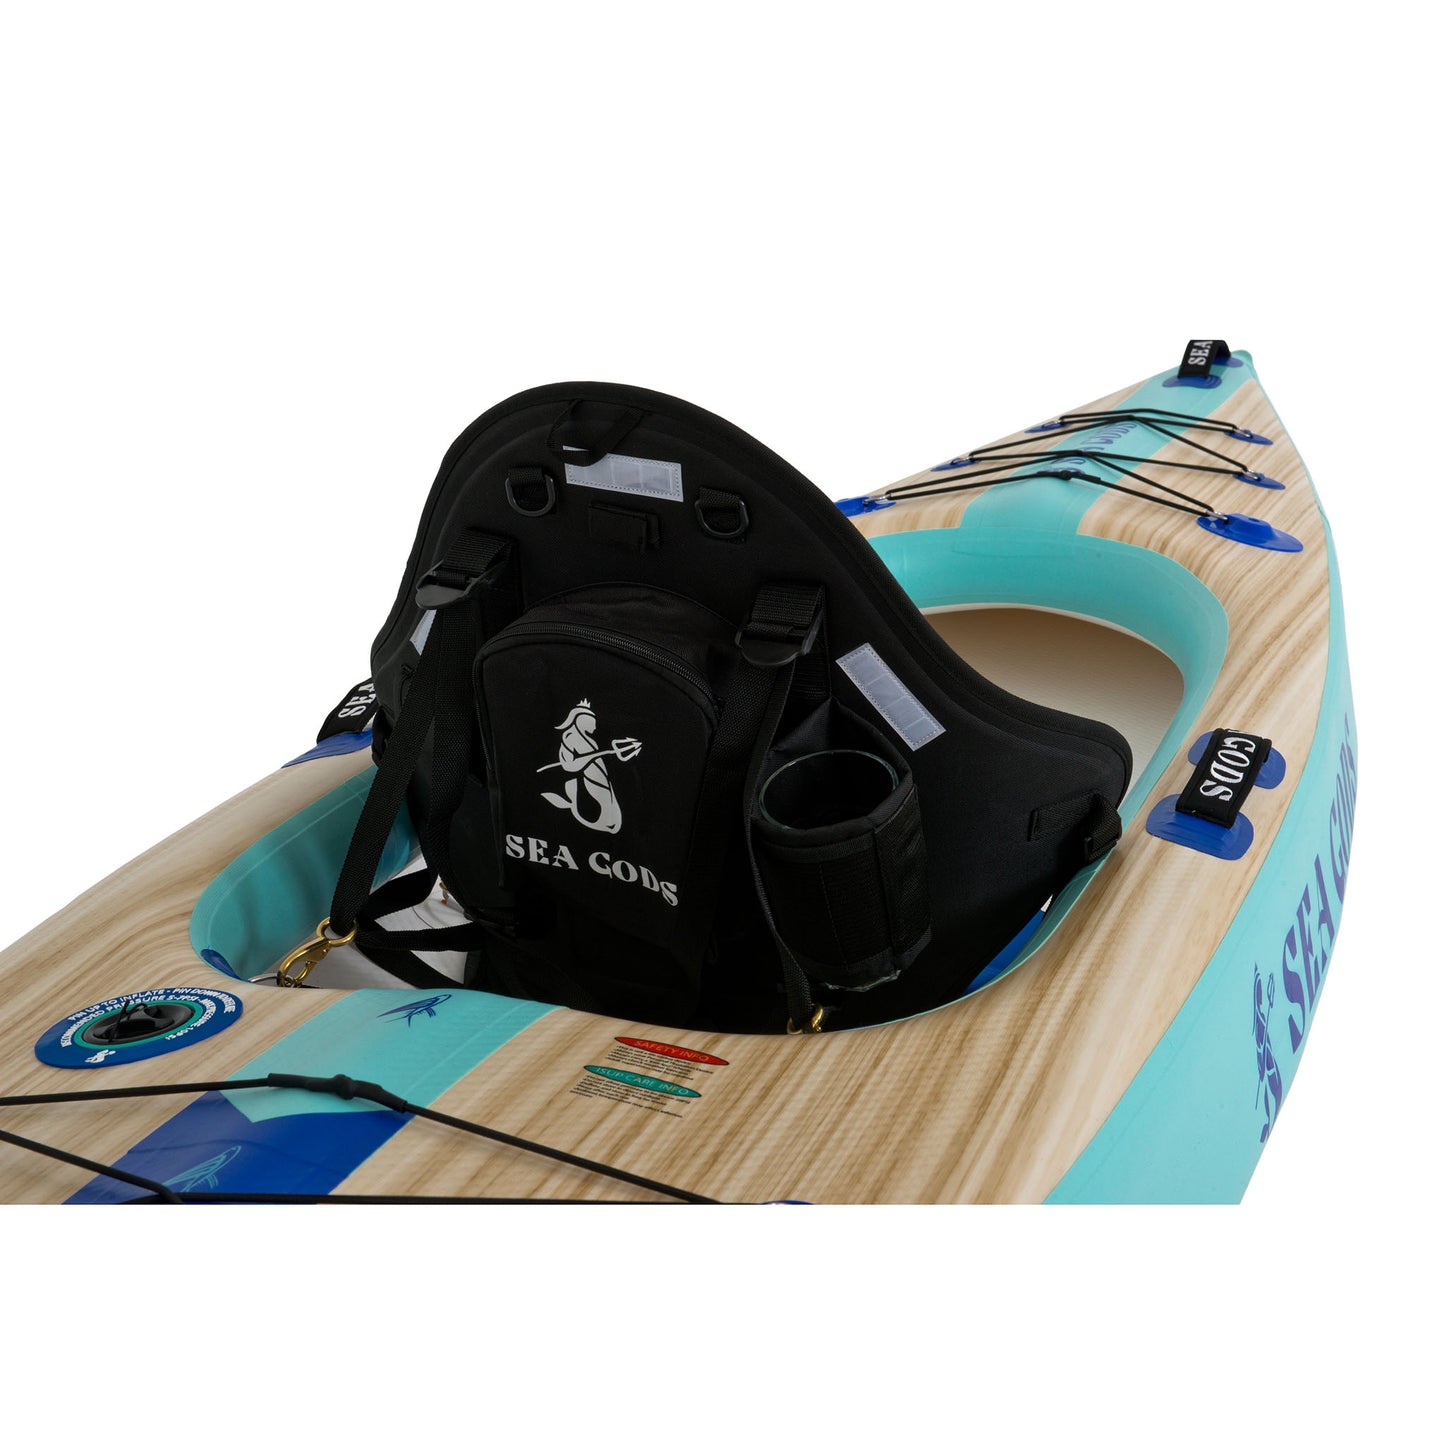 Calypso Single Inflatable Kayak seat view